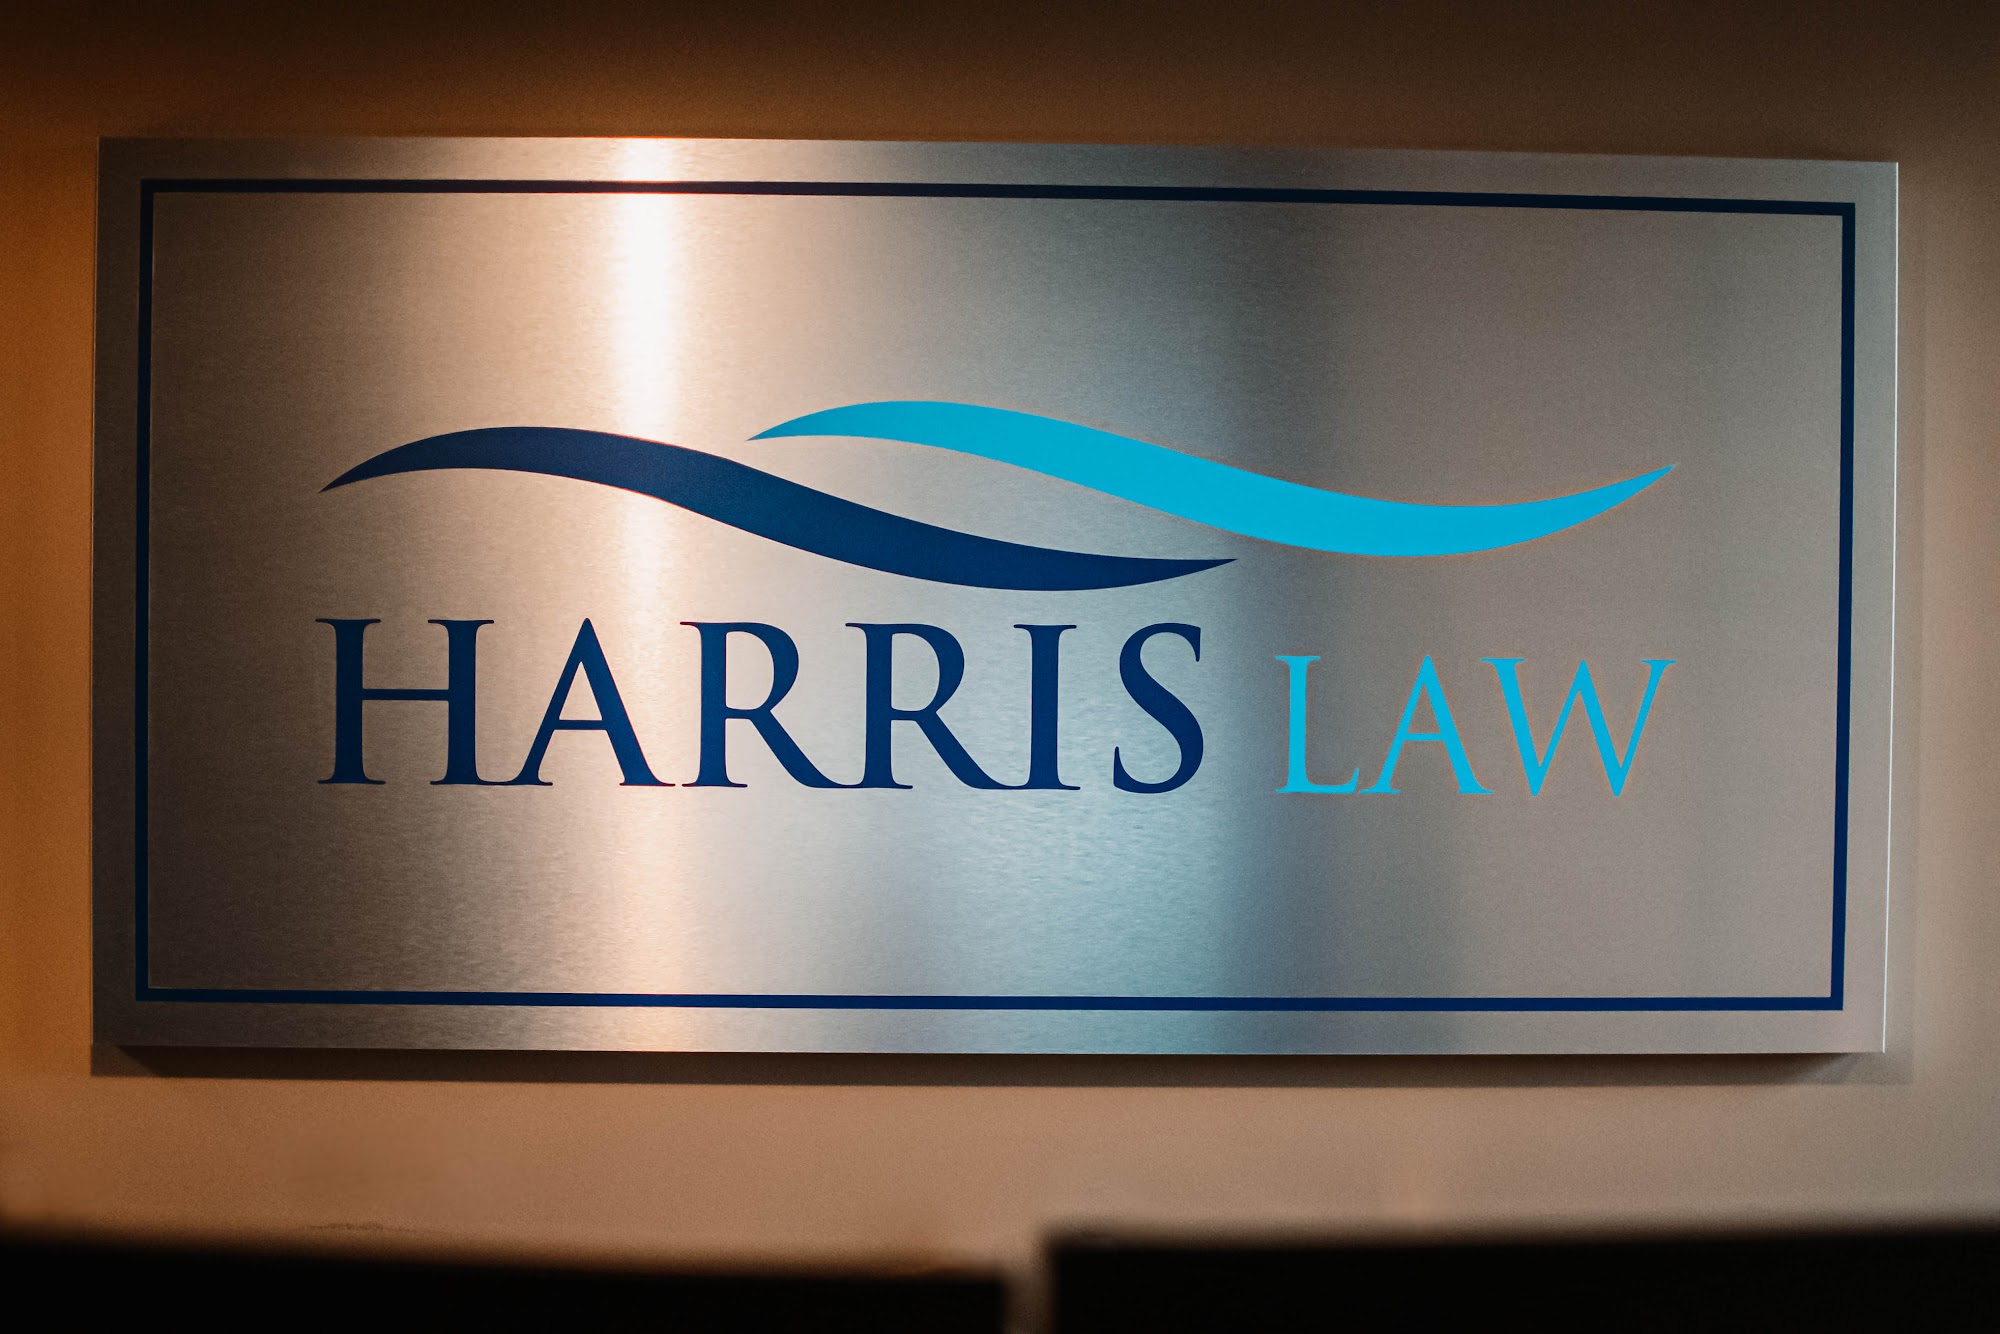 Harris Law 176 N 3rd St, Rogers City Michigan 49779